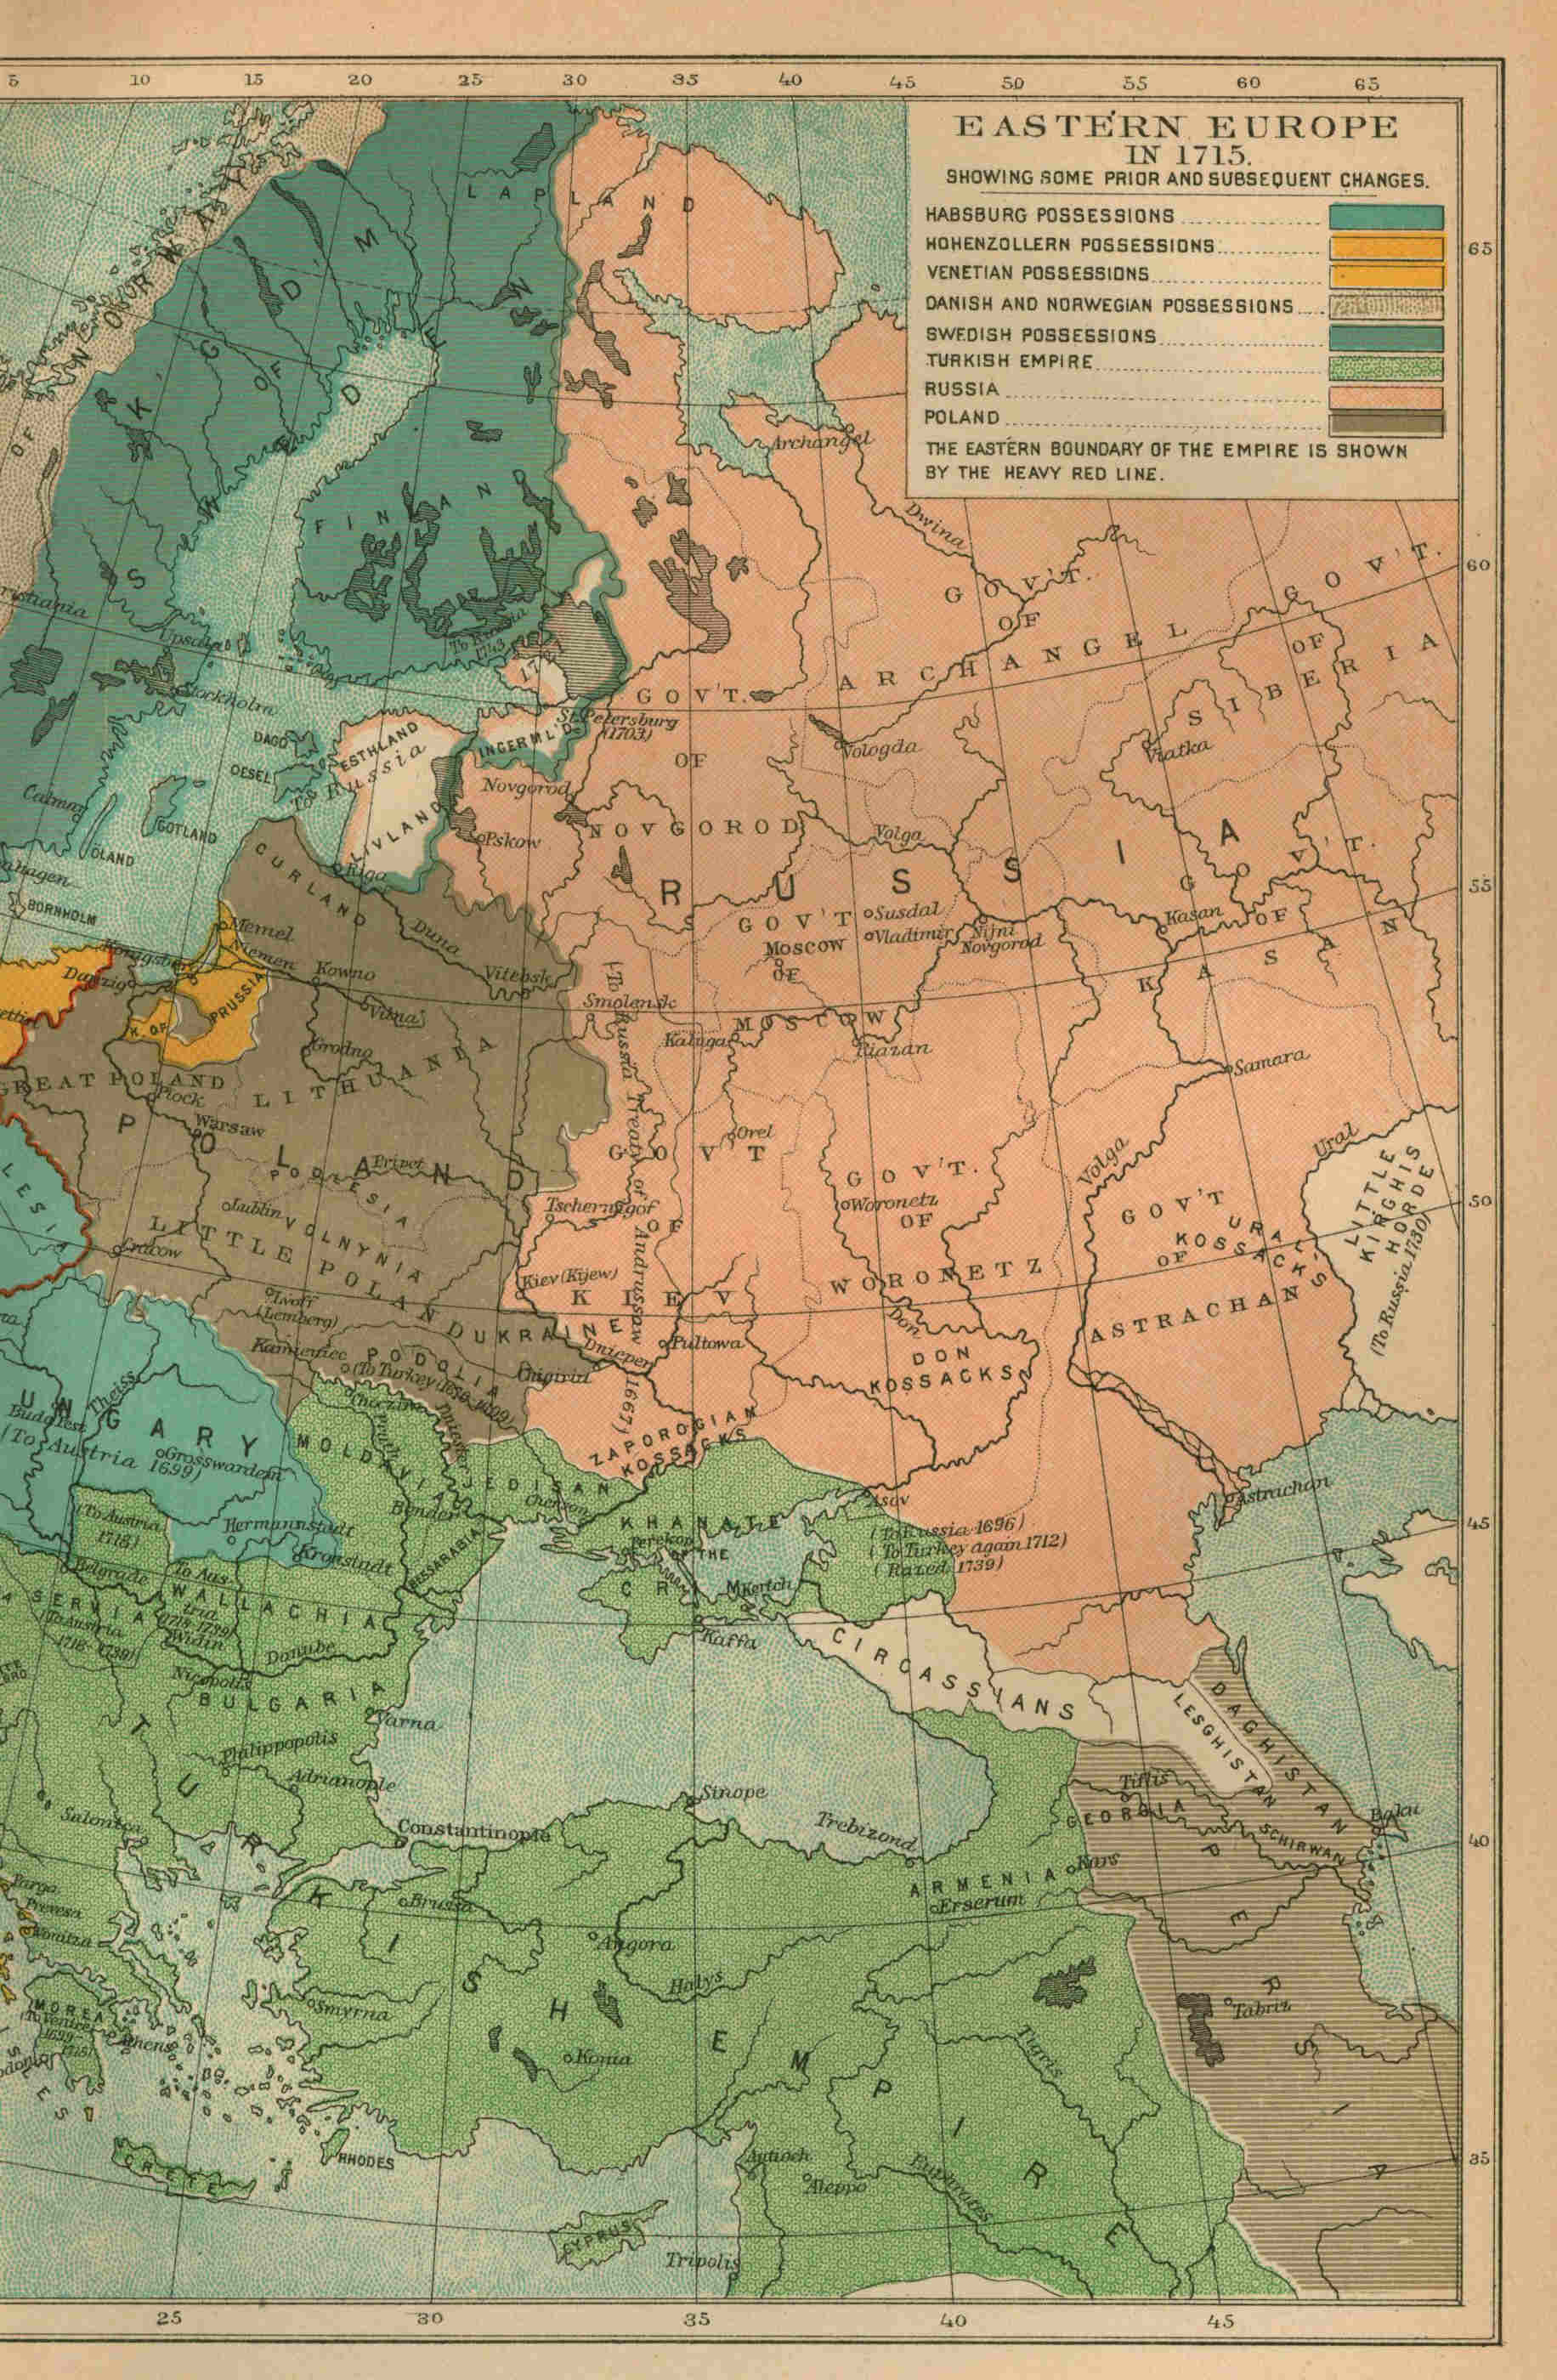 EASTERN EUROPE IN 1715.